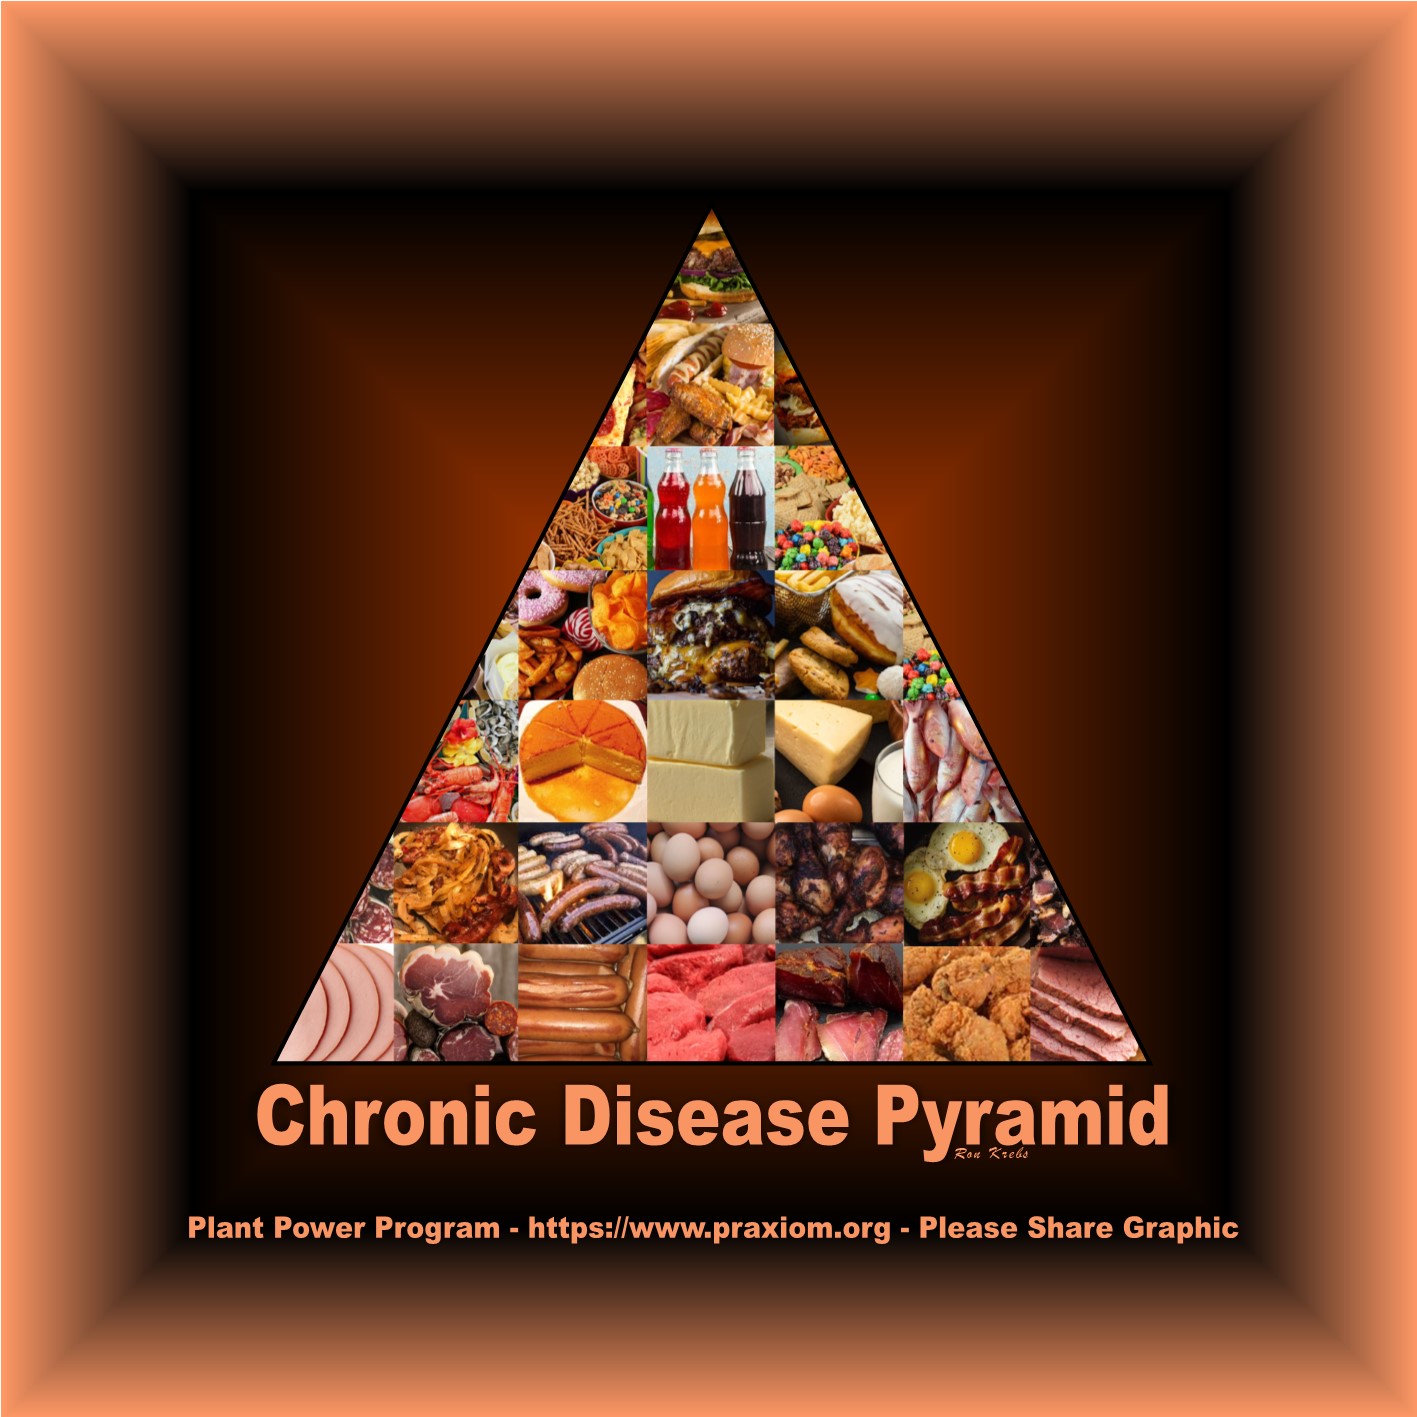 Chronic Disease Pyramid by Ron Krebs